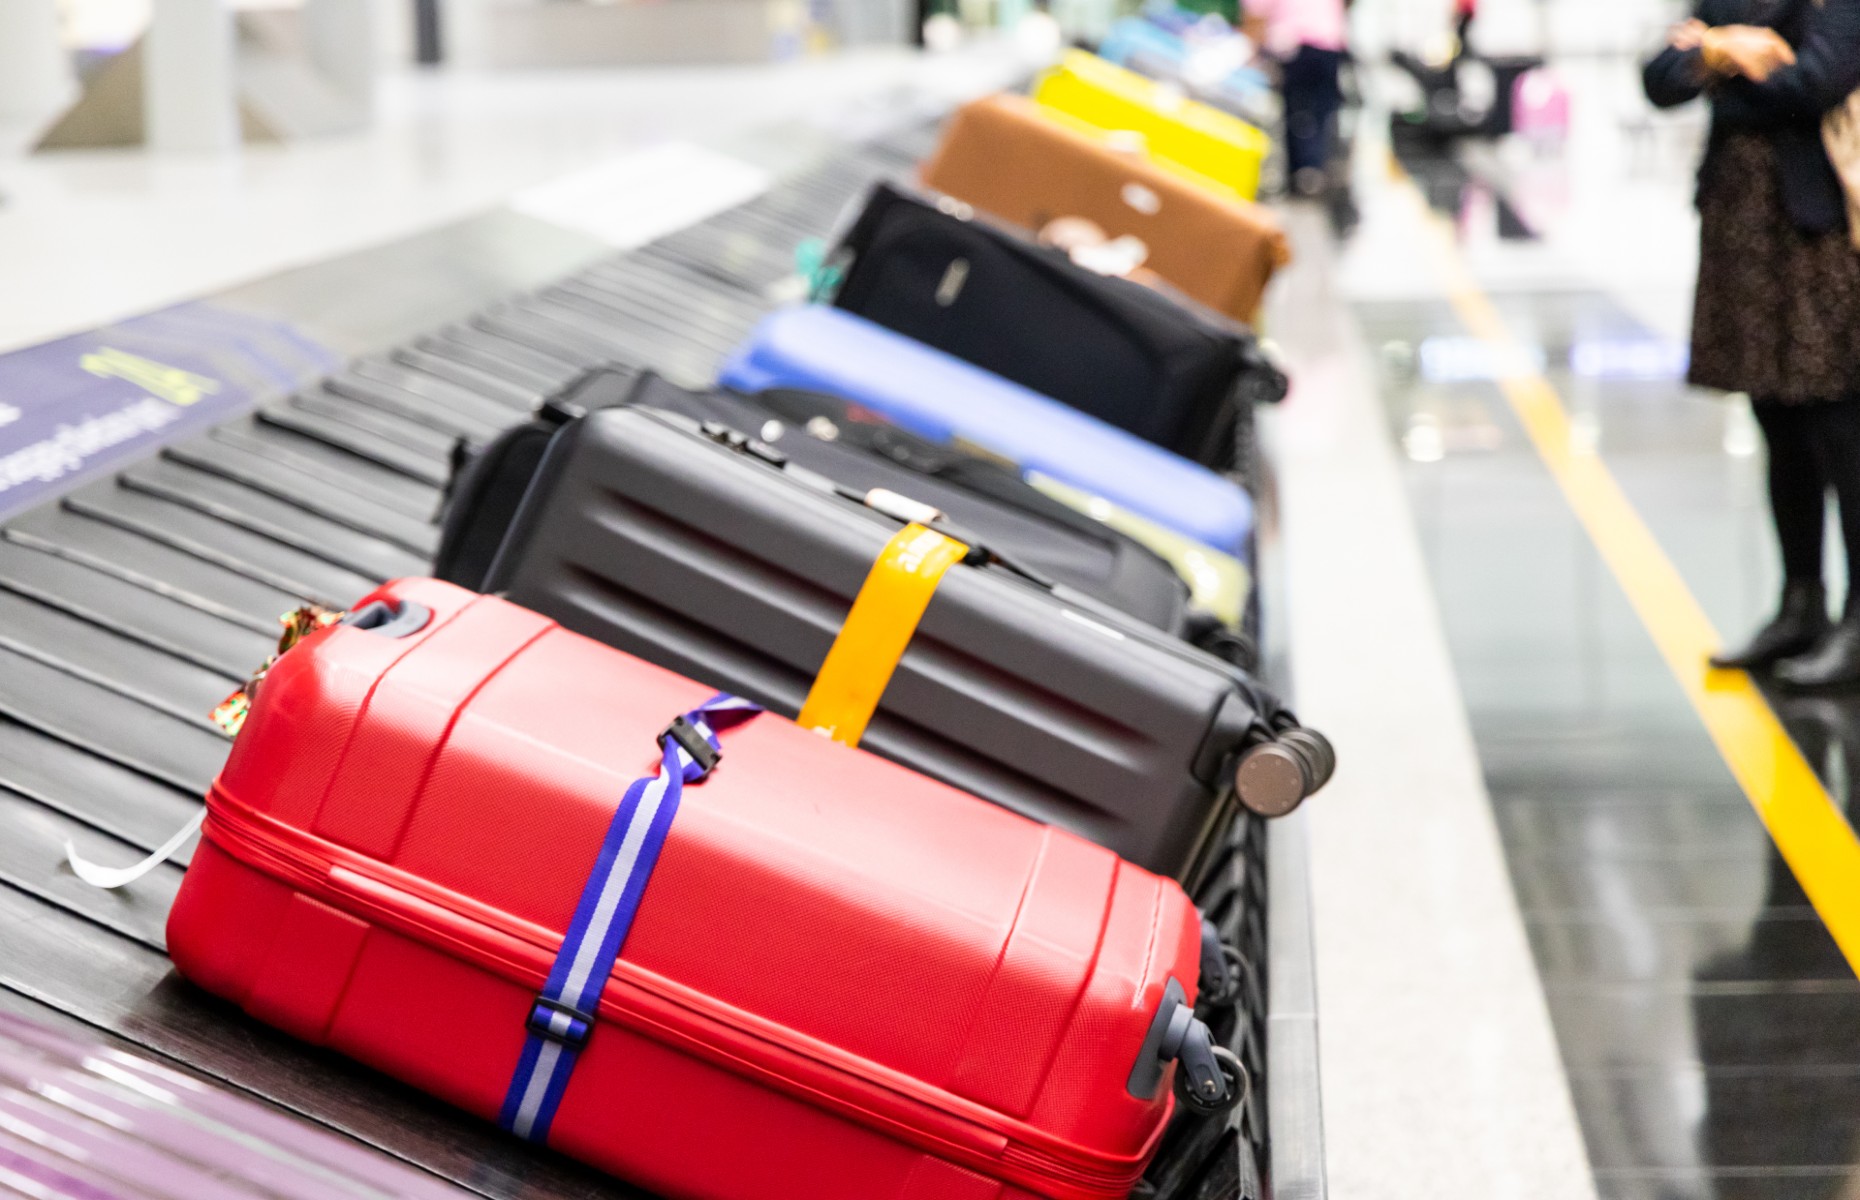 Luggage on baggage reclaim (Image: ThamKC/Shutterstock)